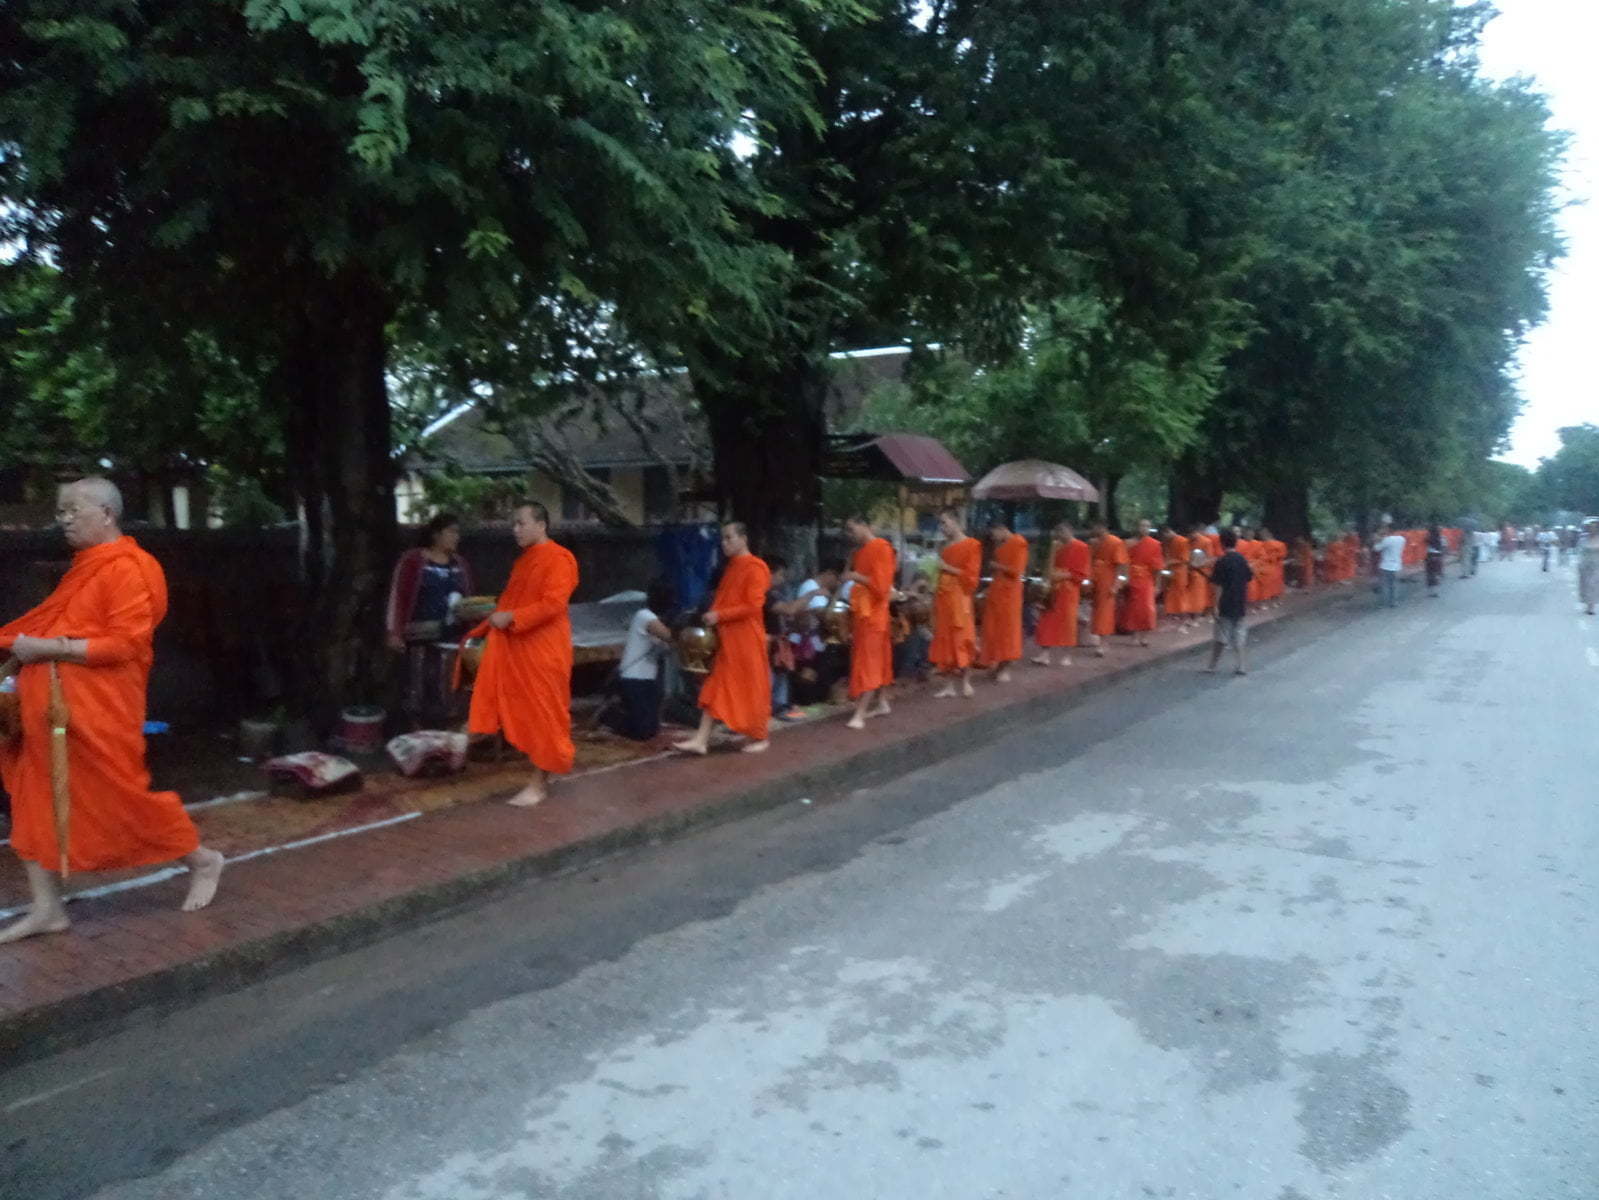 Giving Souls cerimony - Luang Prabang, Laos